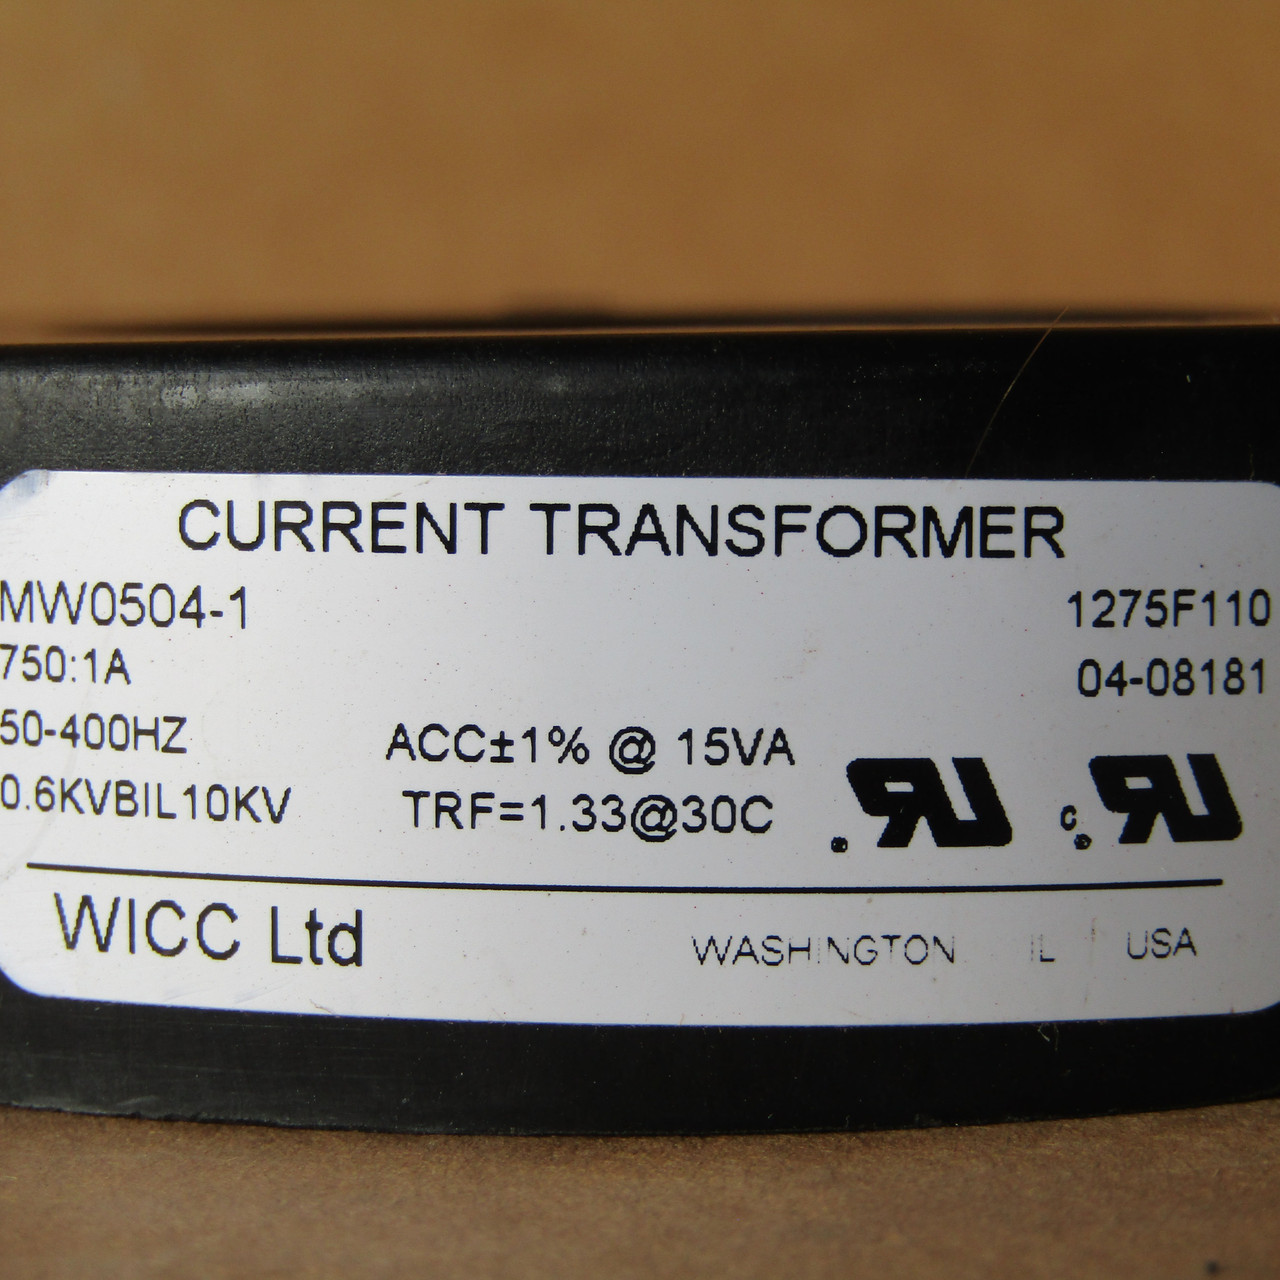 Details about   Wicc Ltd MW0532-1 Current Transformer 1000:1 